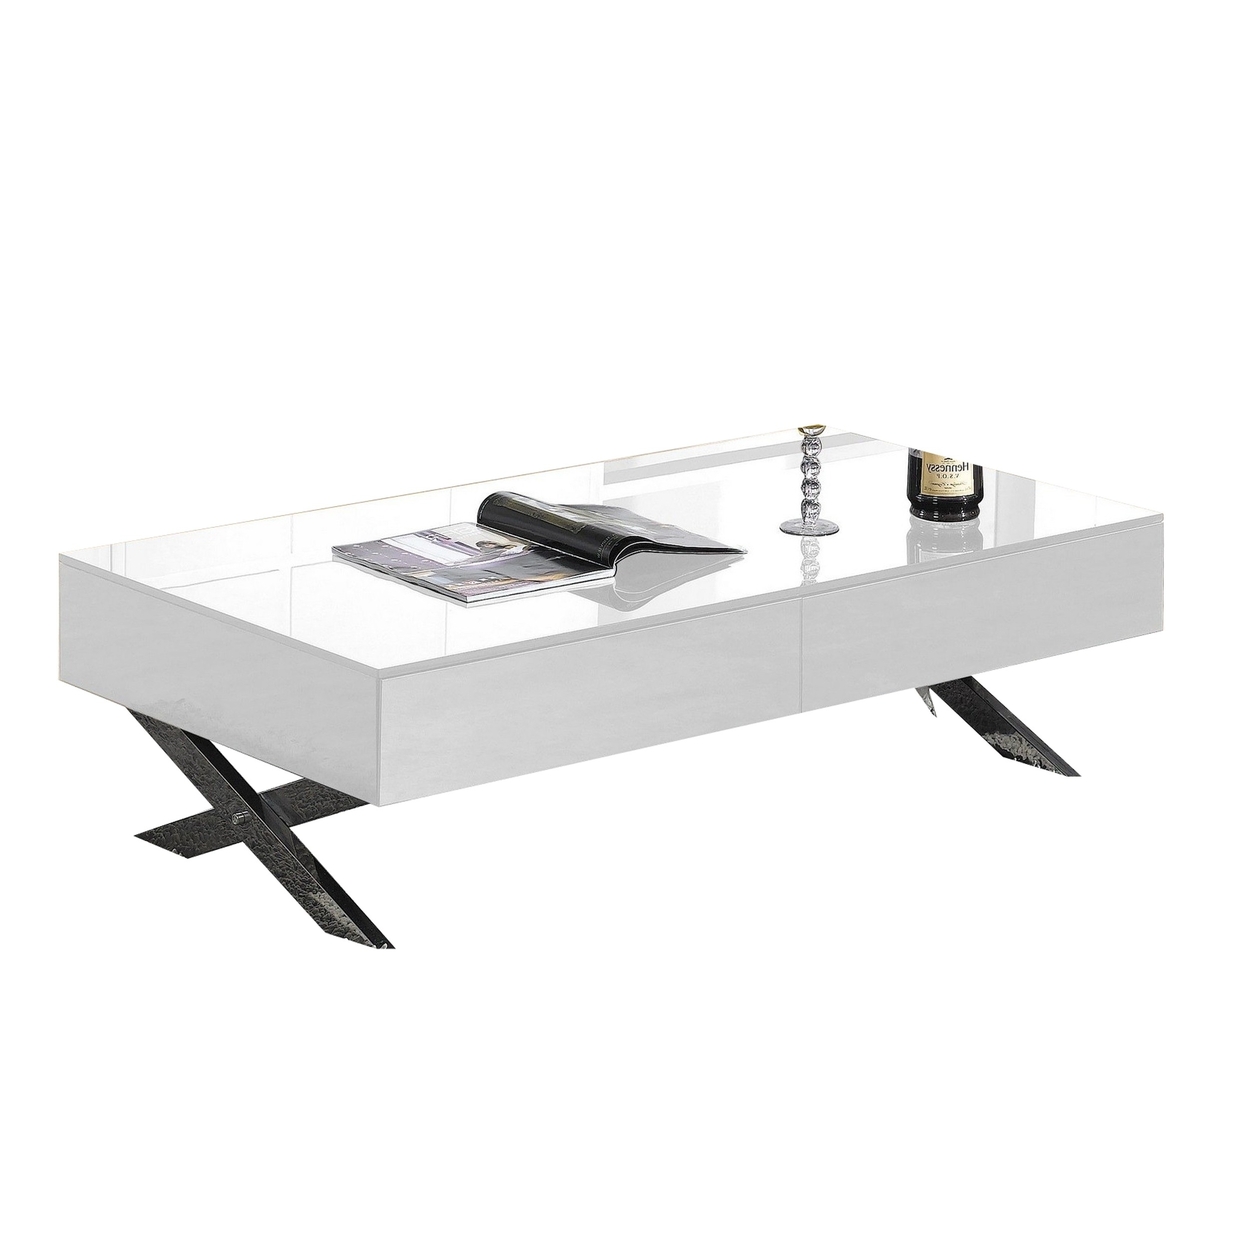 Tika 51 Inch 2 Drawer Coffee Table, White Glass Top, Chrome Metal X Legs - Saltoro Sherpi